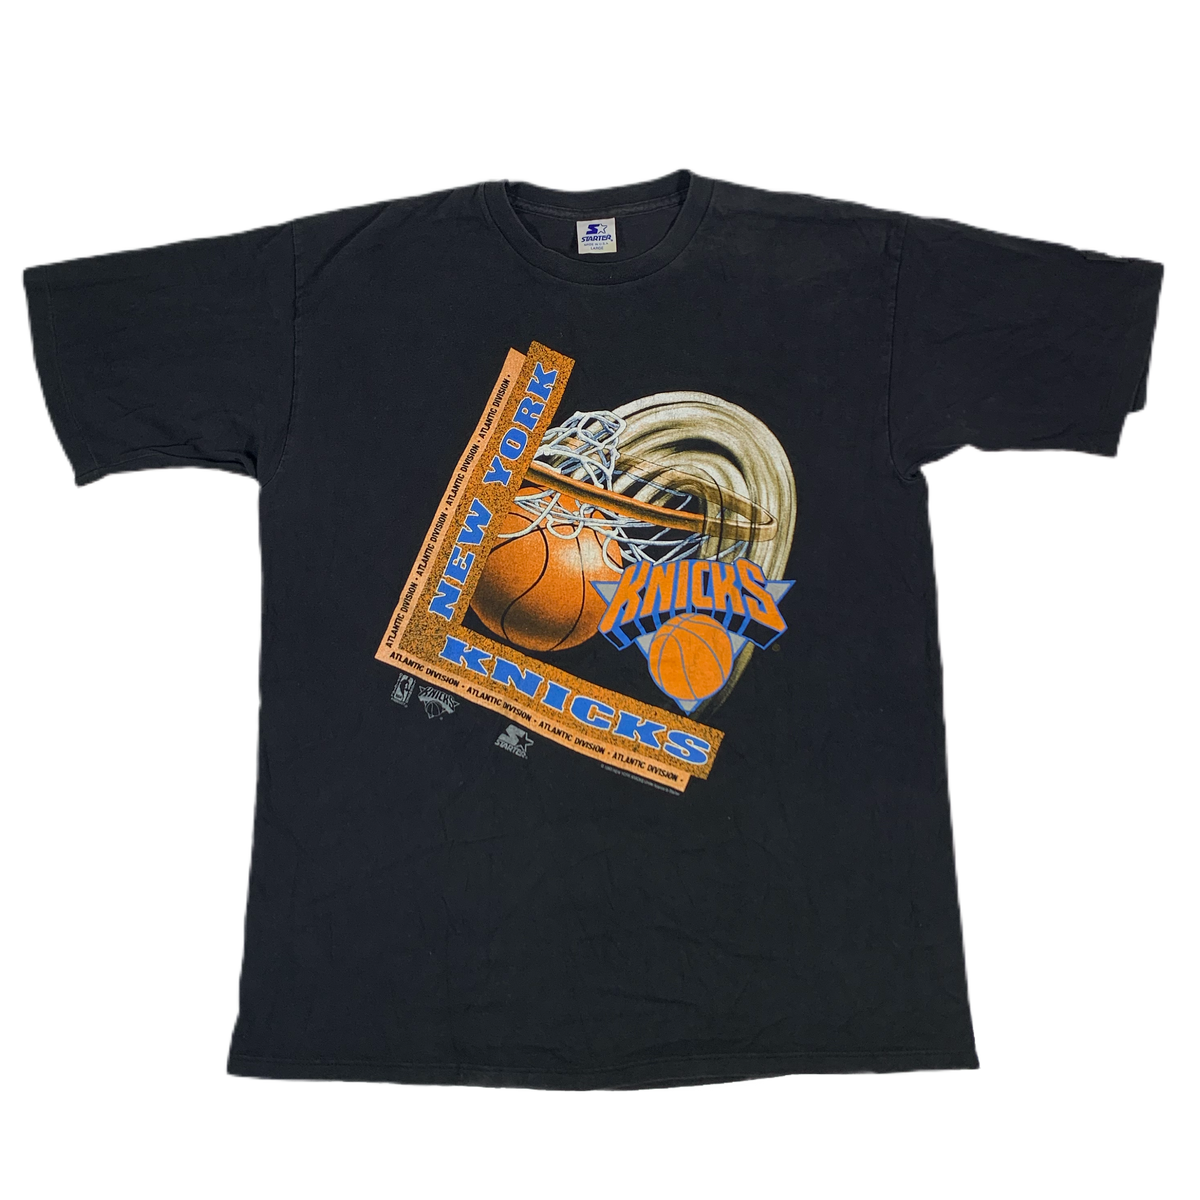 Vintage New York Knicks “Starter” T-Shirt - jointcustodydc